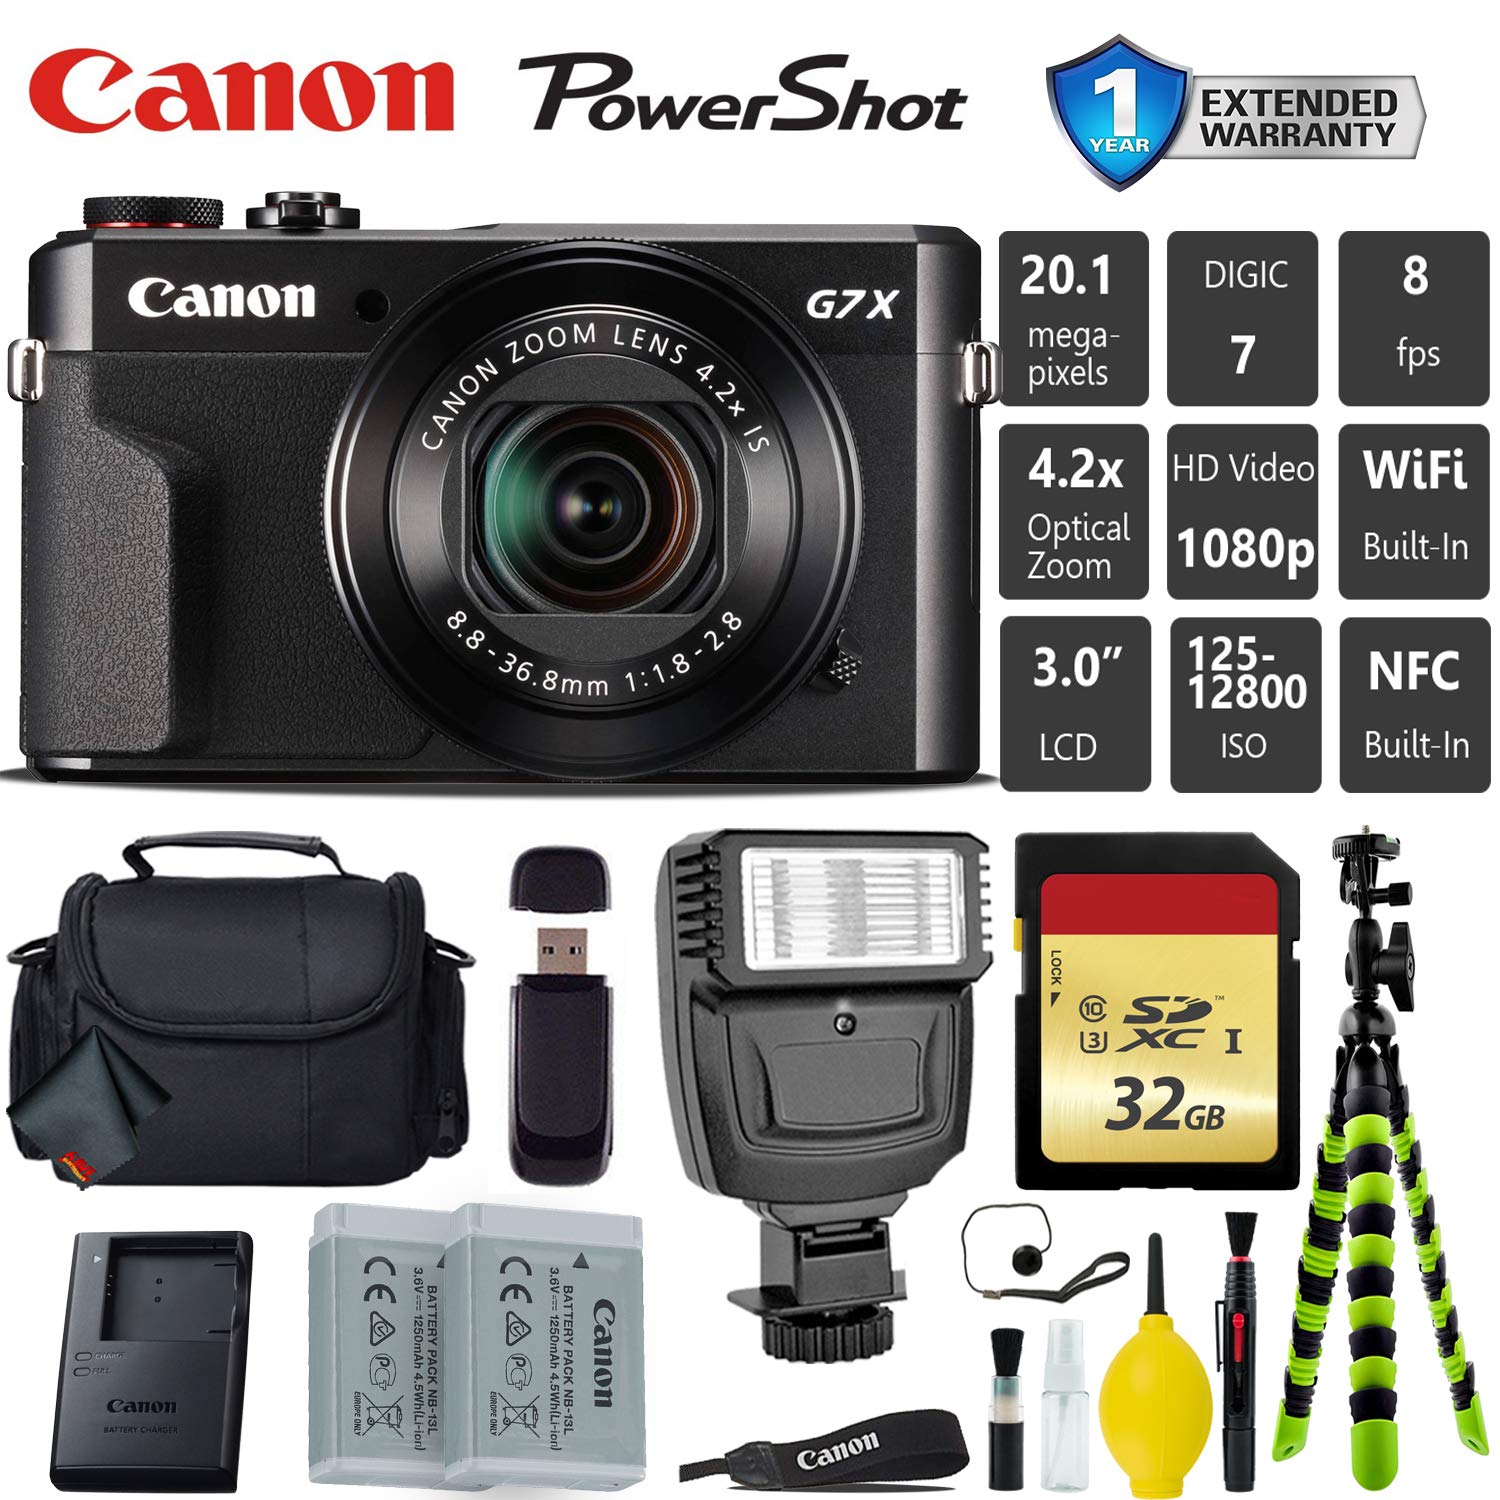 Canon PowerShot G7 X Mark II Point and Shoot Digital Camera + Extra Battery + Digital Flash + Camera Case + 32GB Class 1 Card Pro Bundle